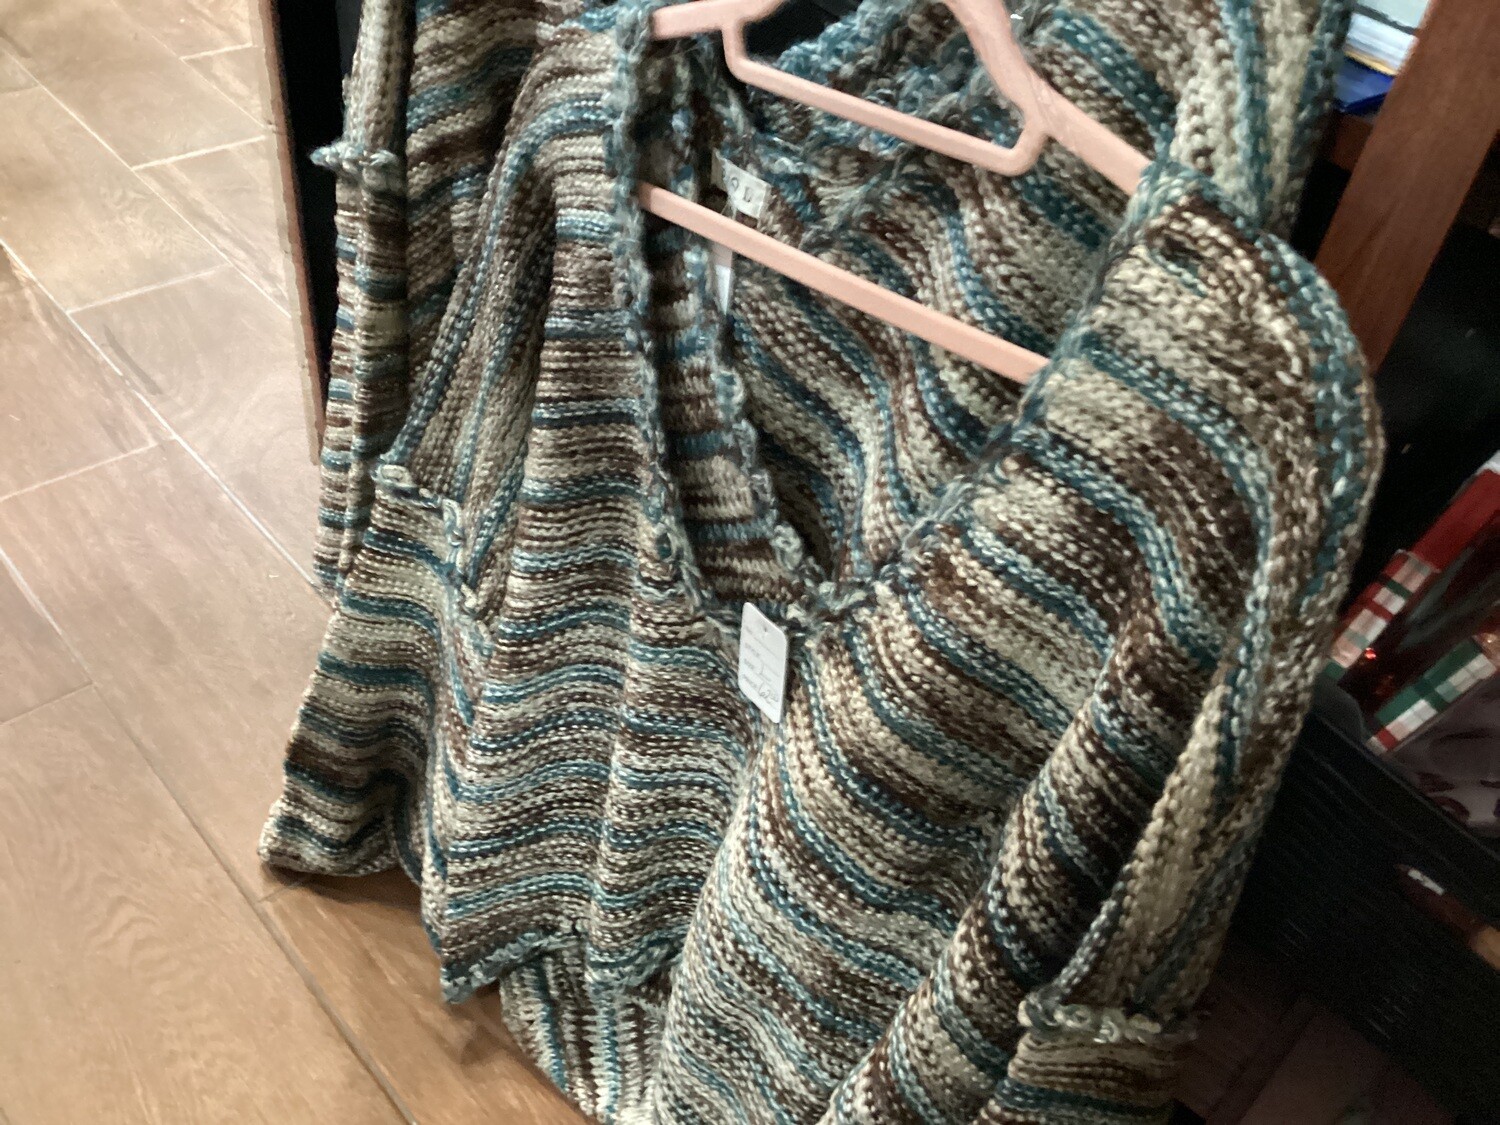 Pol teal brown striped sweater